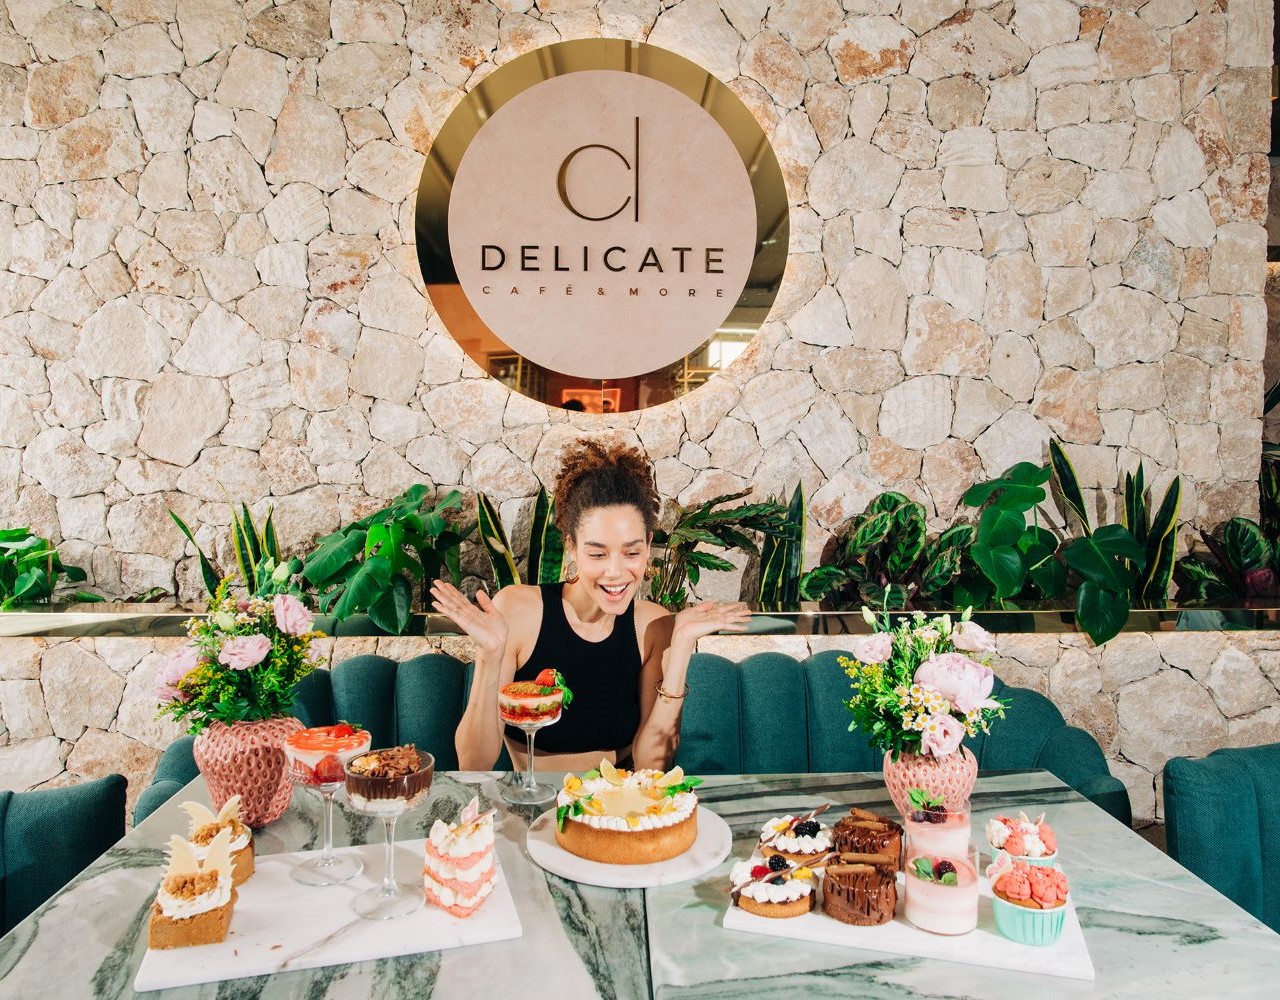 Delicate: Μπήκαμε πρώτοι στο νέο roof top café & more του Hondos Center Καλλιθέας